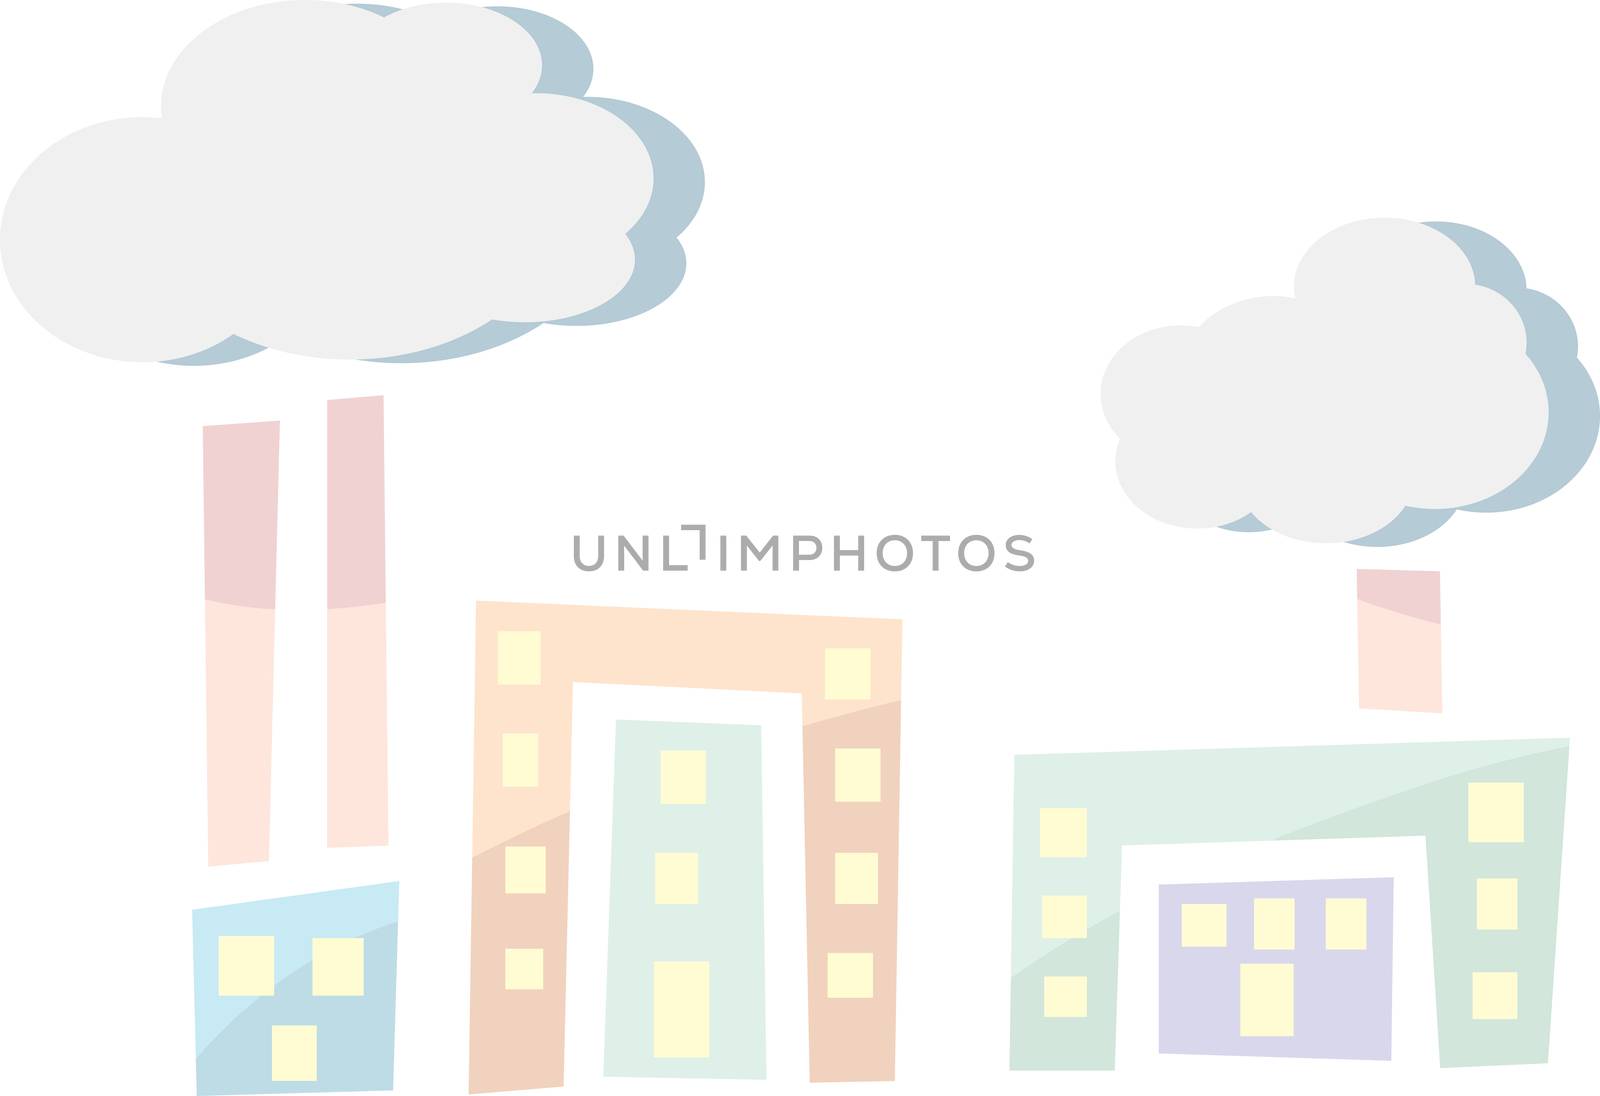 Abstract icons of buildings with smokestacks and smog